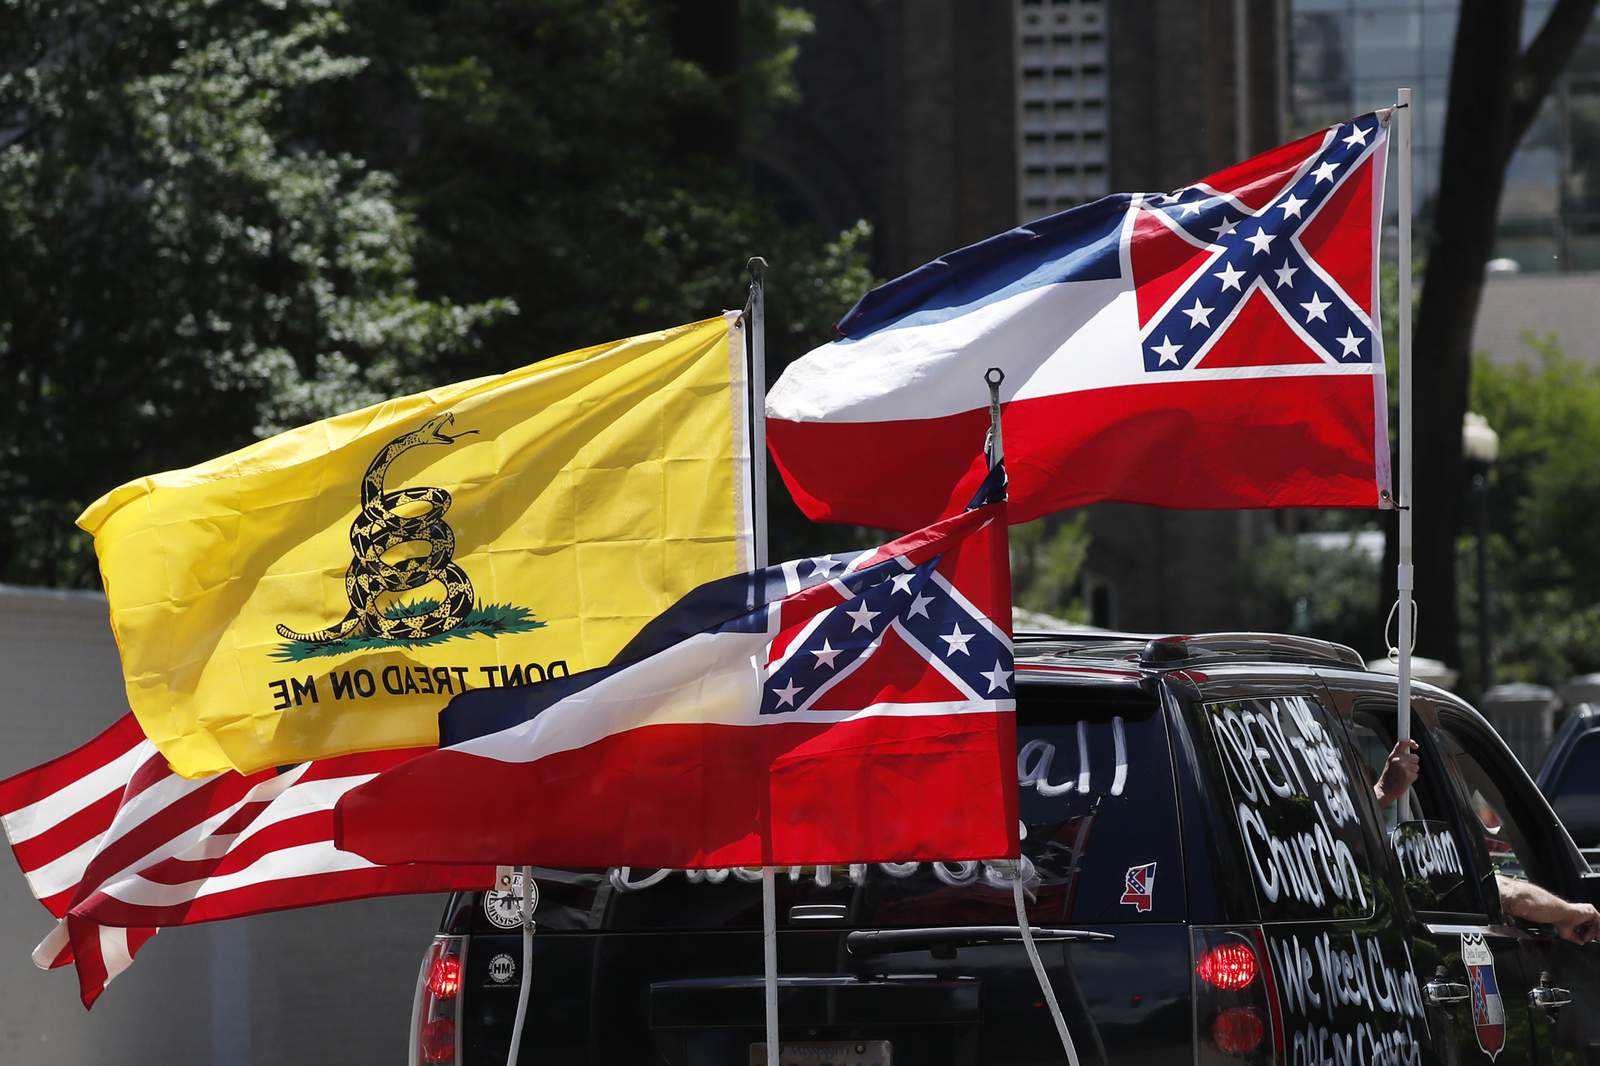 Baptists and Walmart criticize rebel-themed Mississippi flag